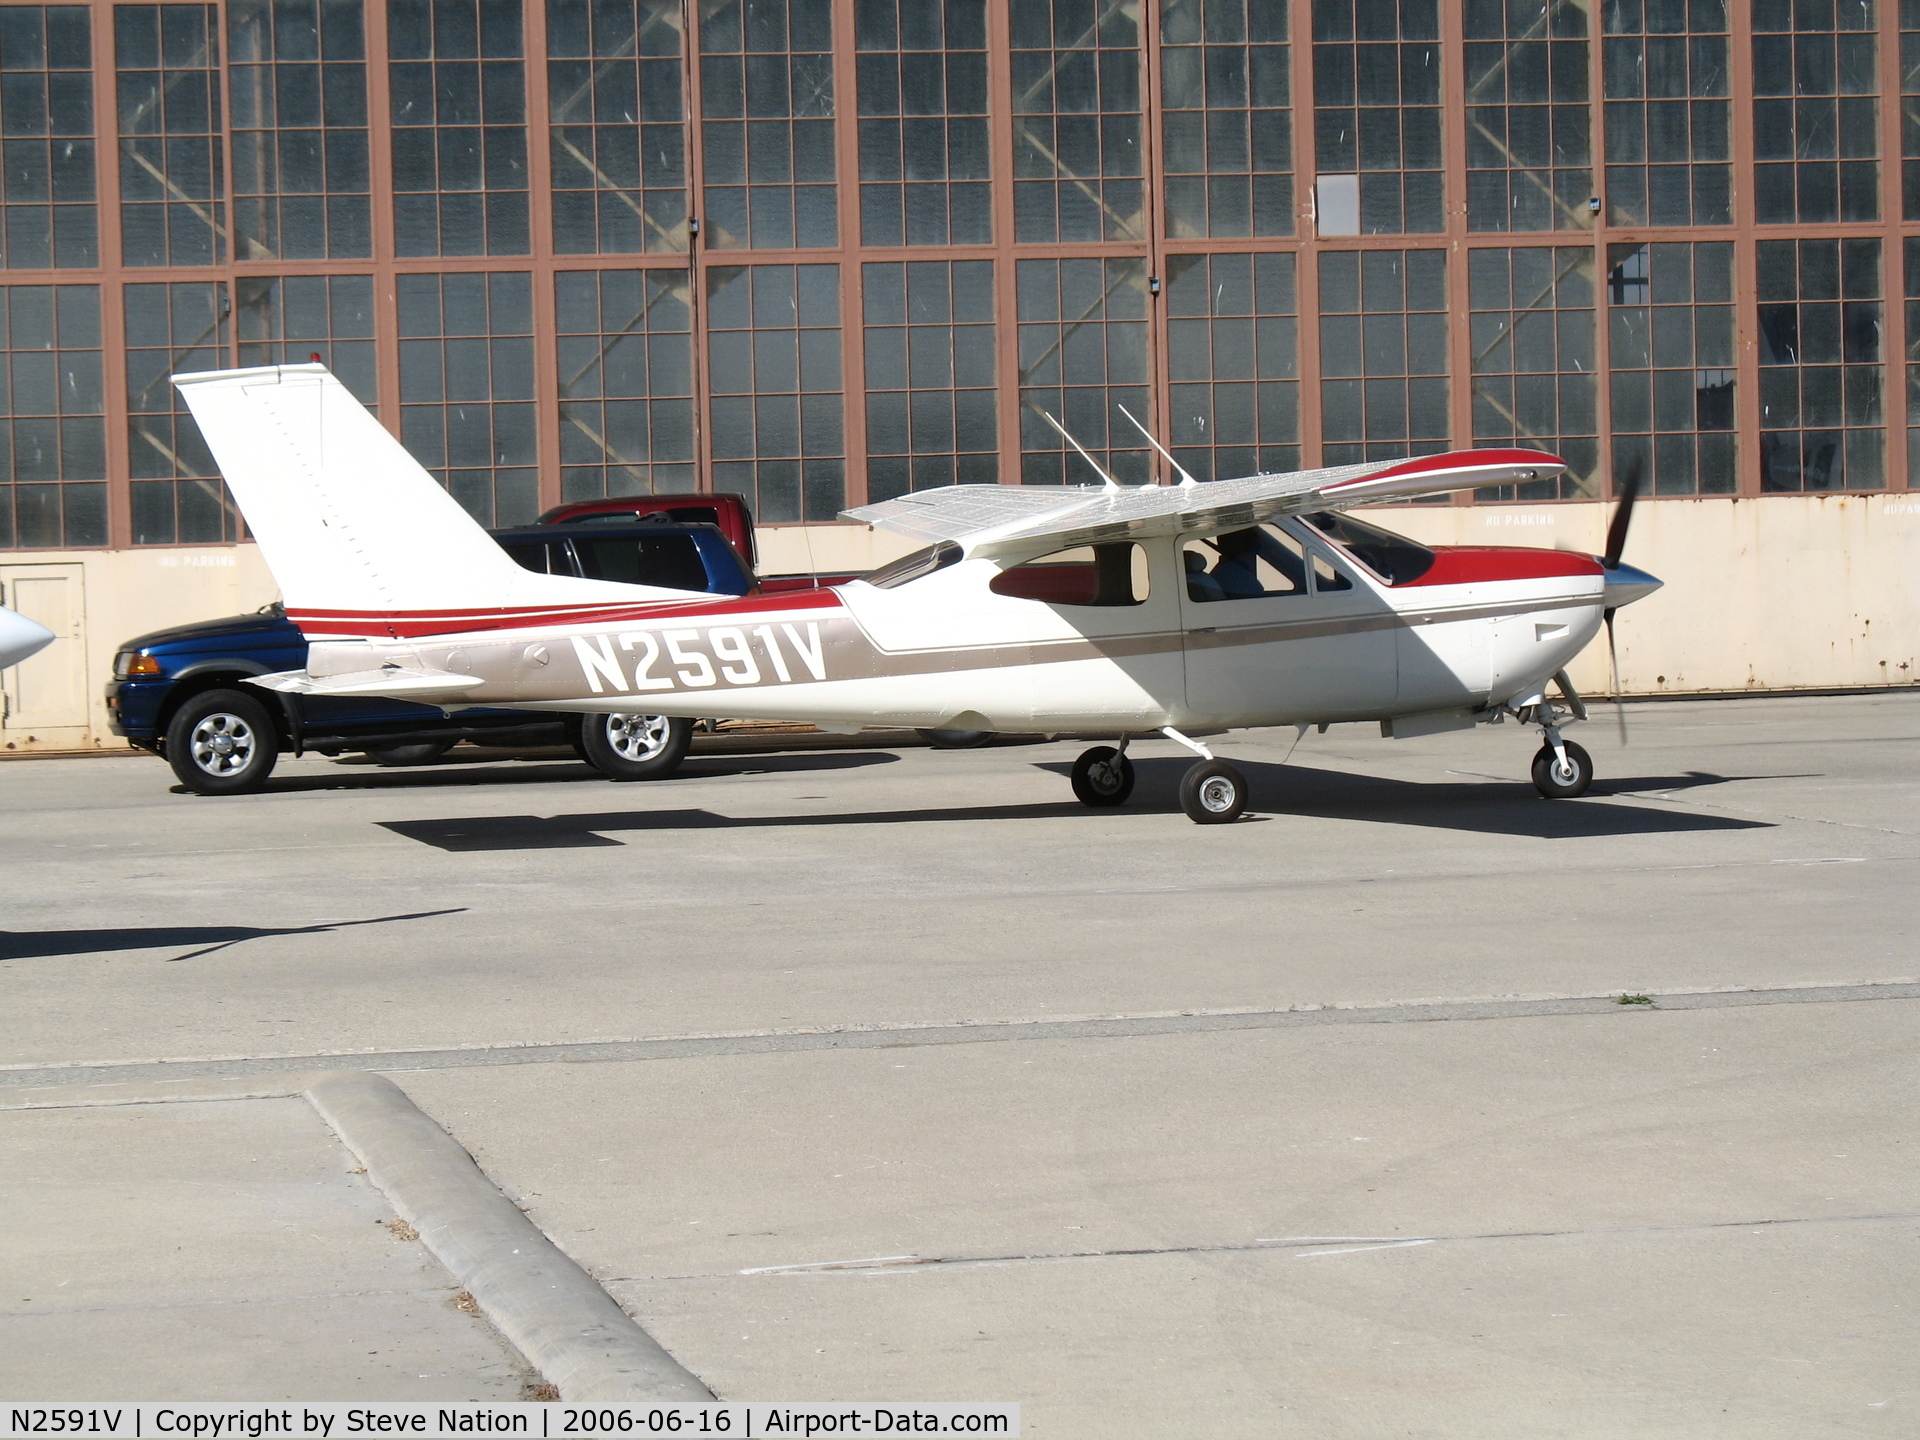 N2591V, 1974 Cessna 177RG Cardinal C/N 177RG0627, 1974 Cessna 177RG taxying @ Salinas Municipal Airport, CA